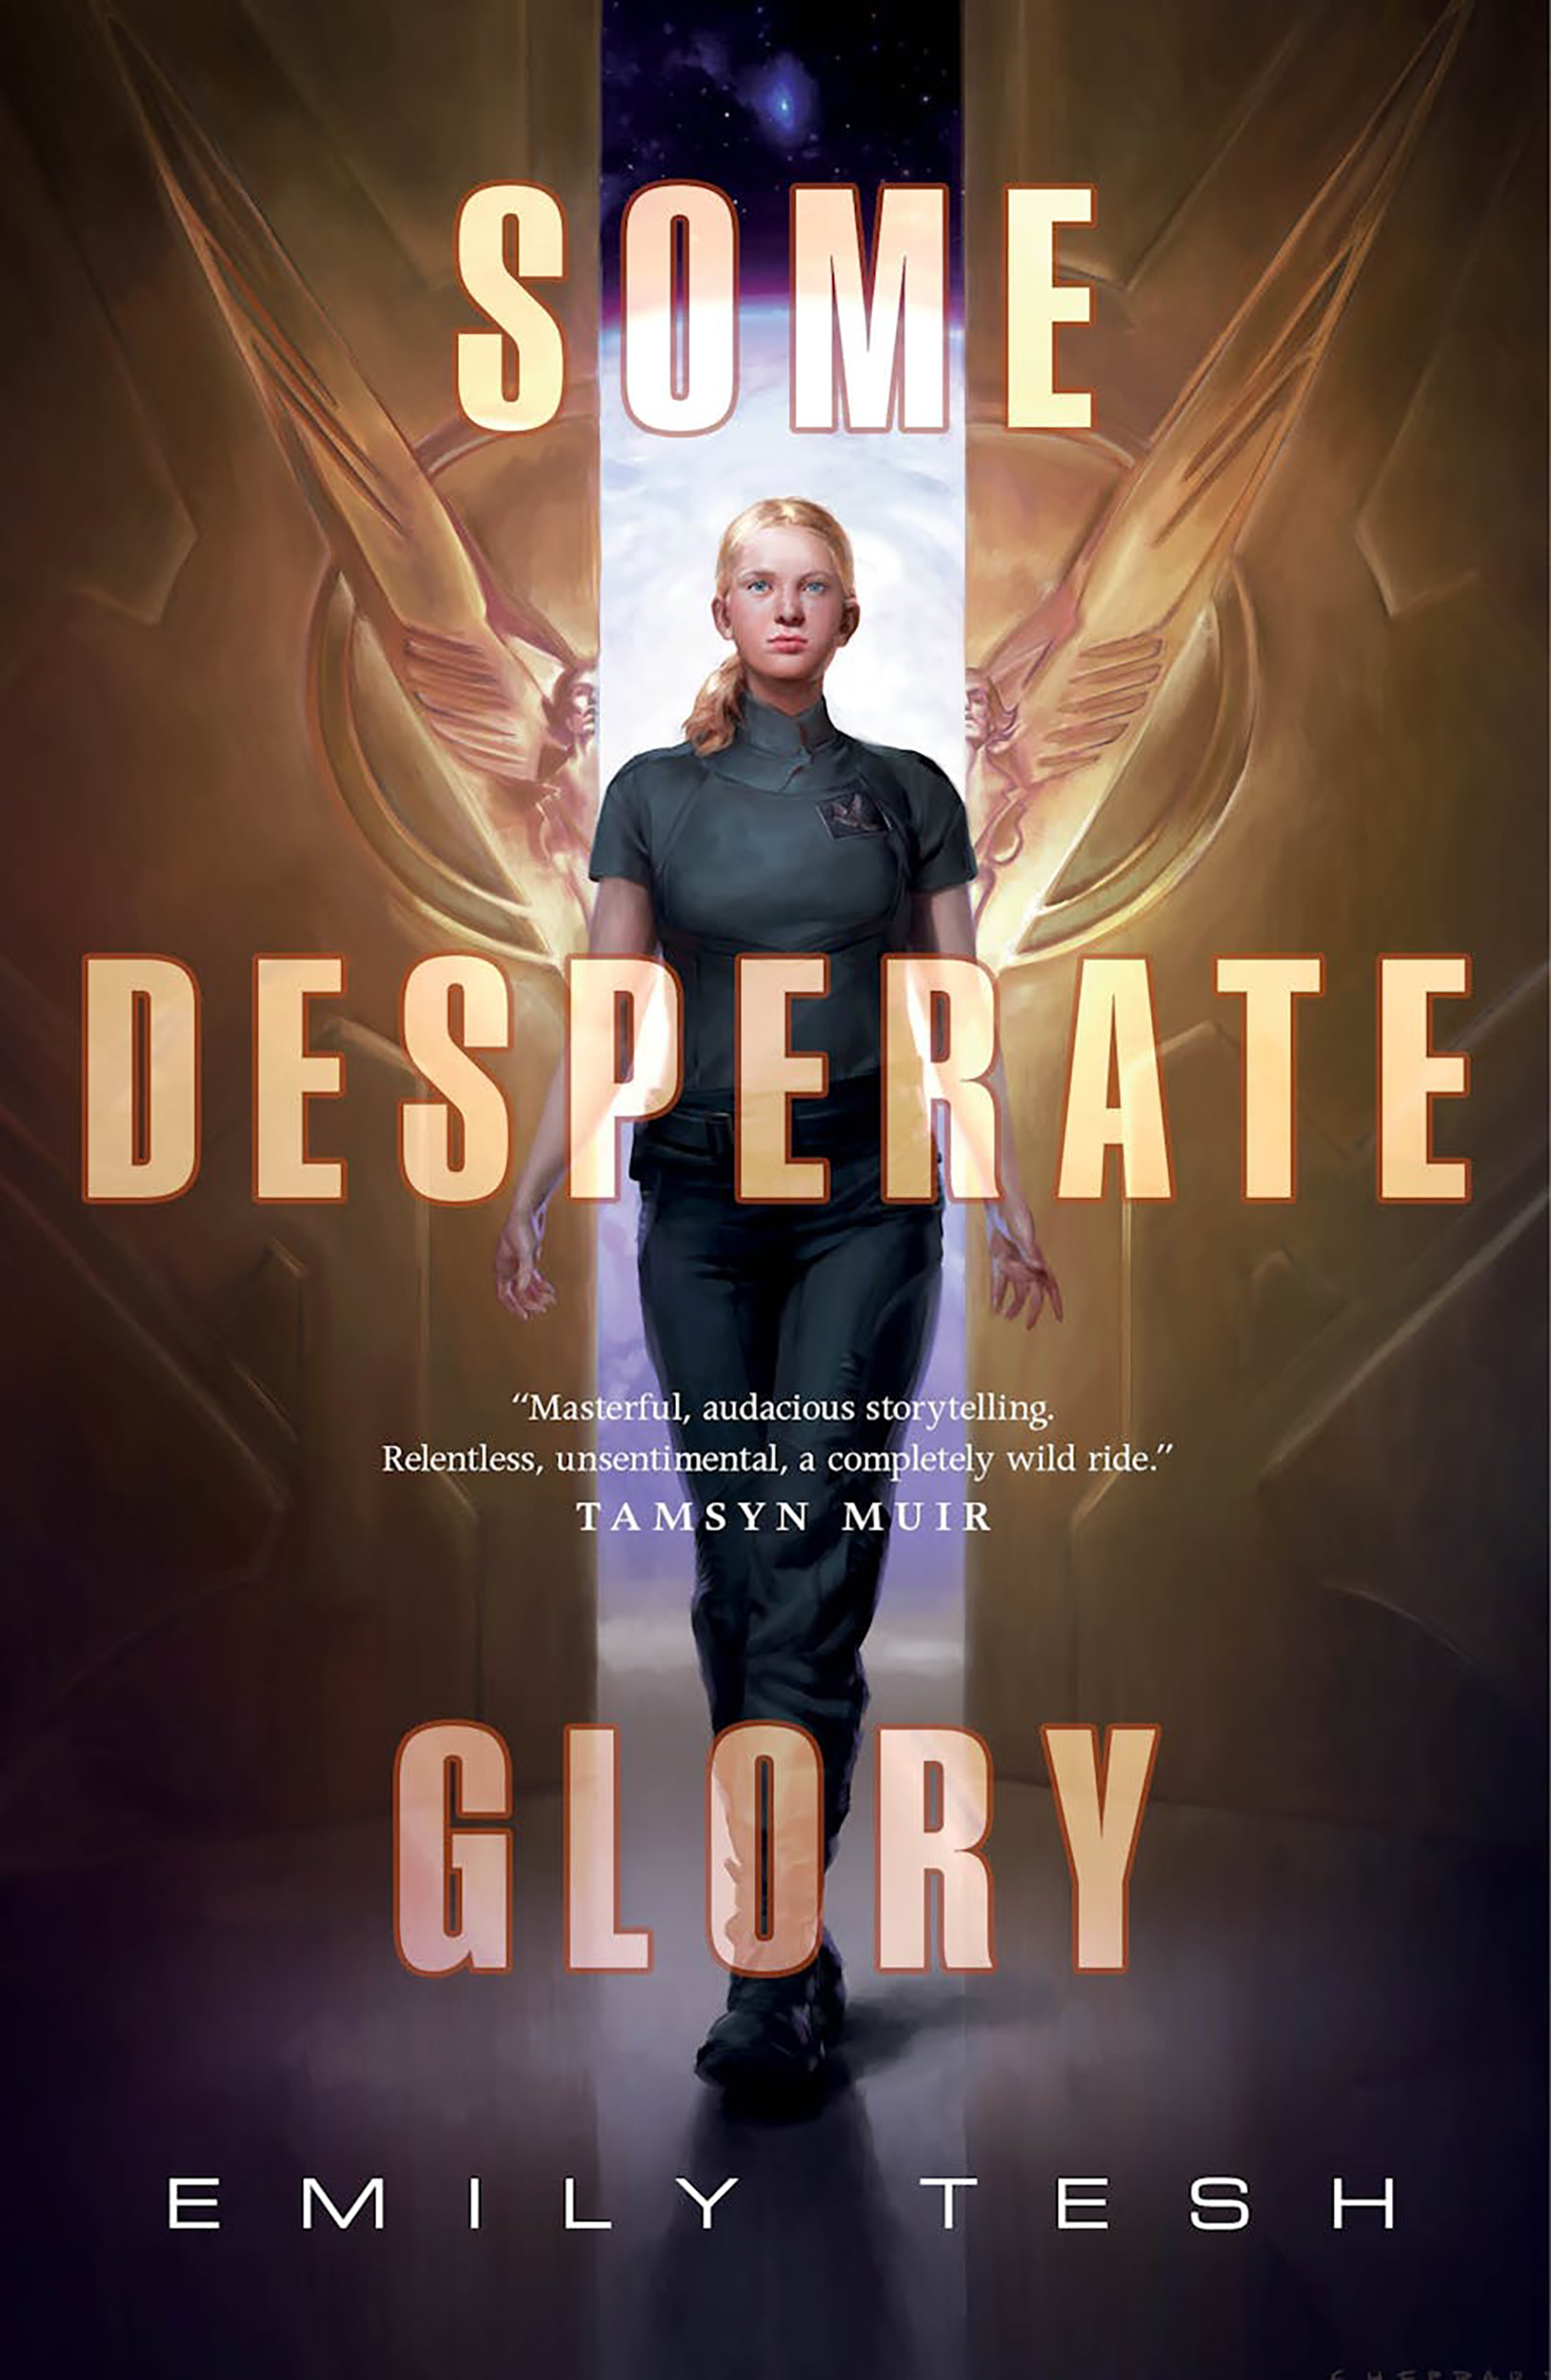 Book cover: "Some Desperate Glory."